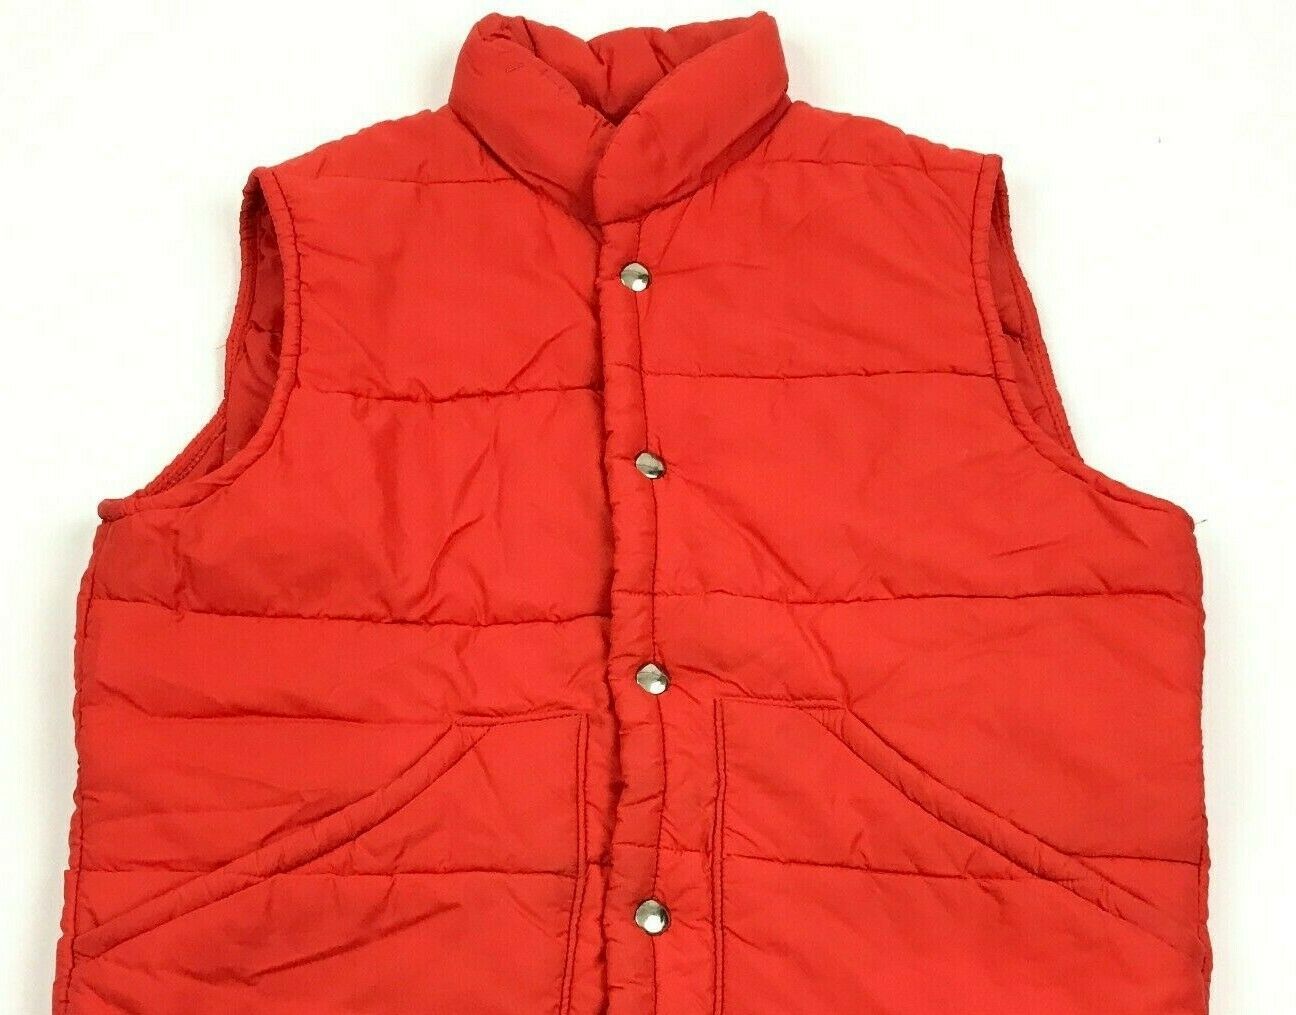 VINTAGE Orange Puffer Jacket Vest Women's Size Small Gilet Insulated ...